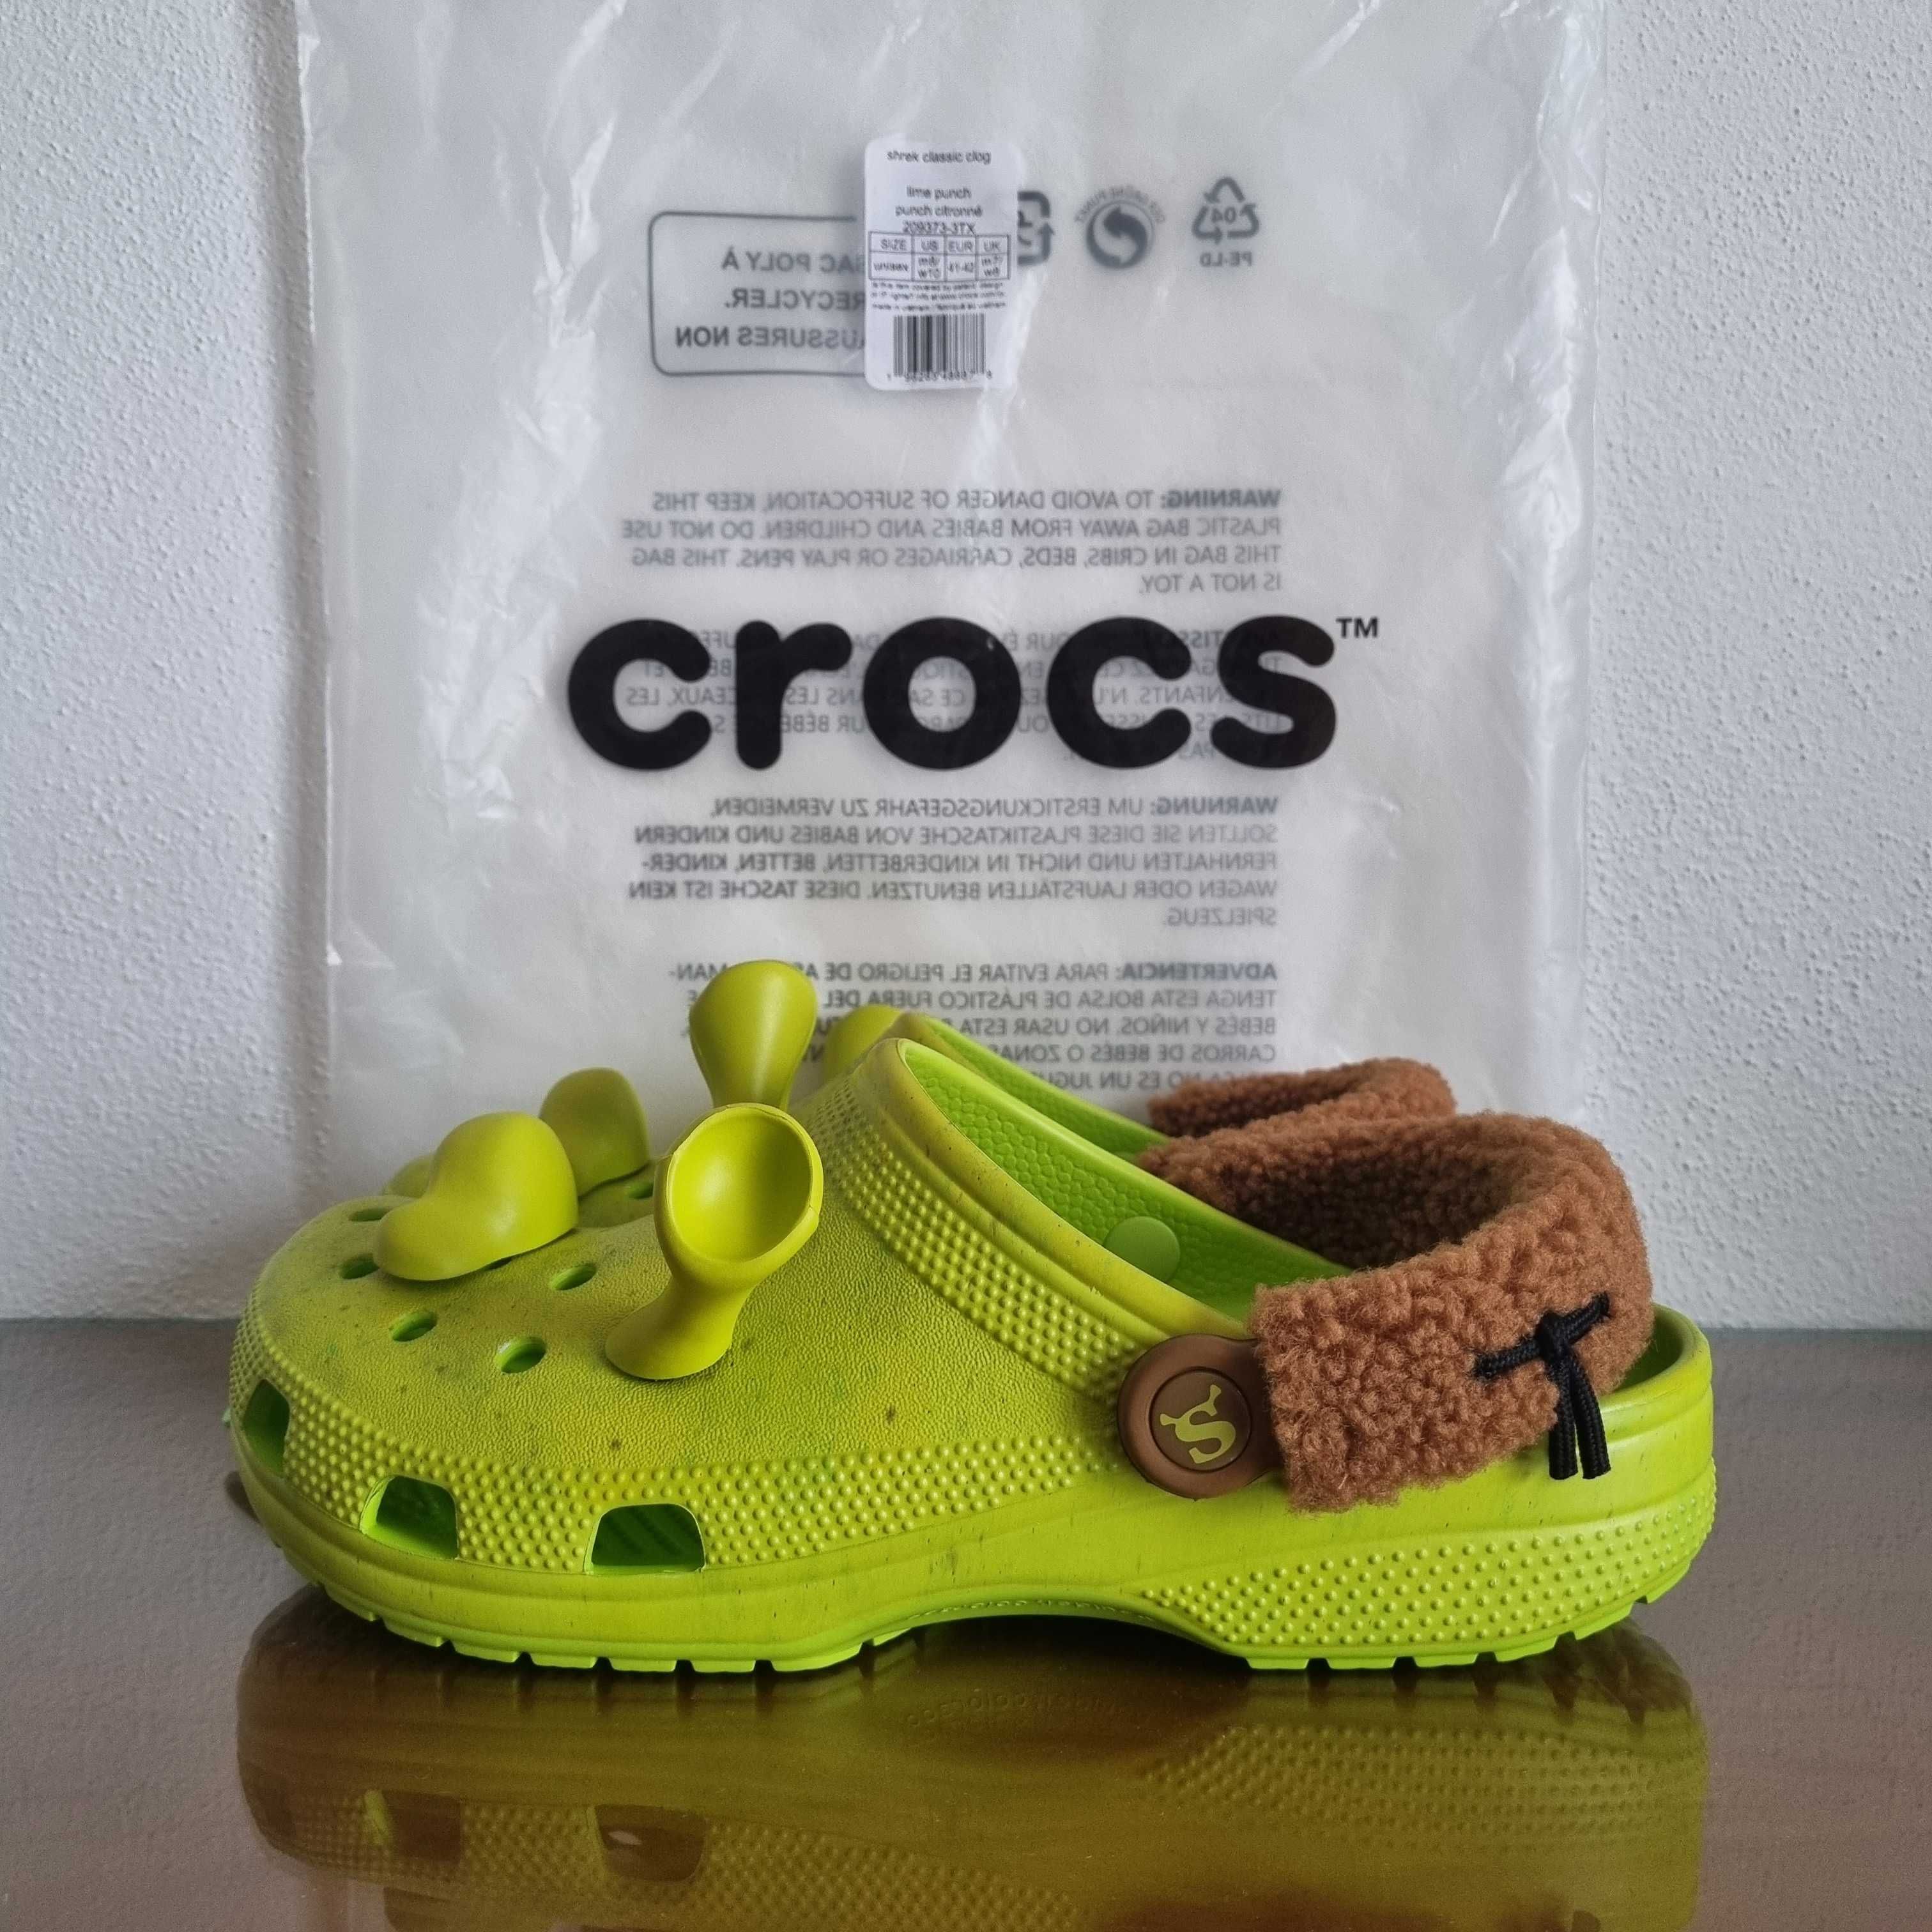 Crocs Classic Clog "Shrek" - Tamanho 41/42